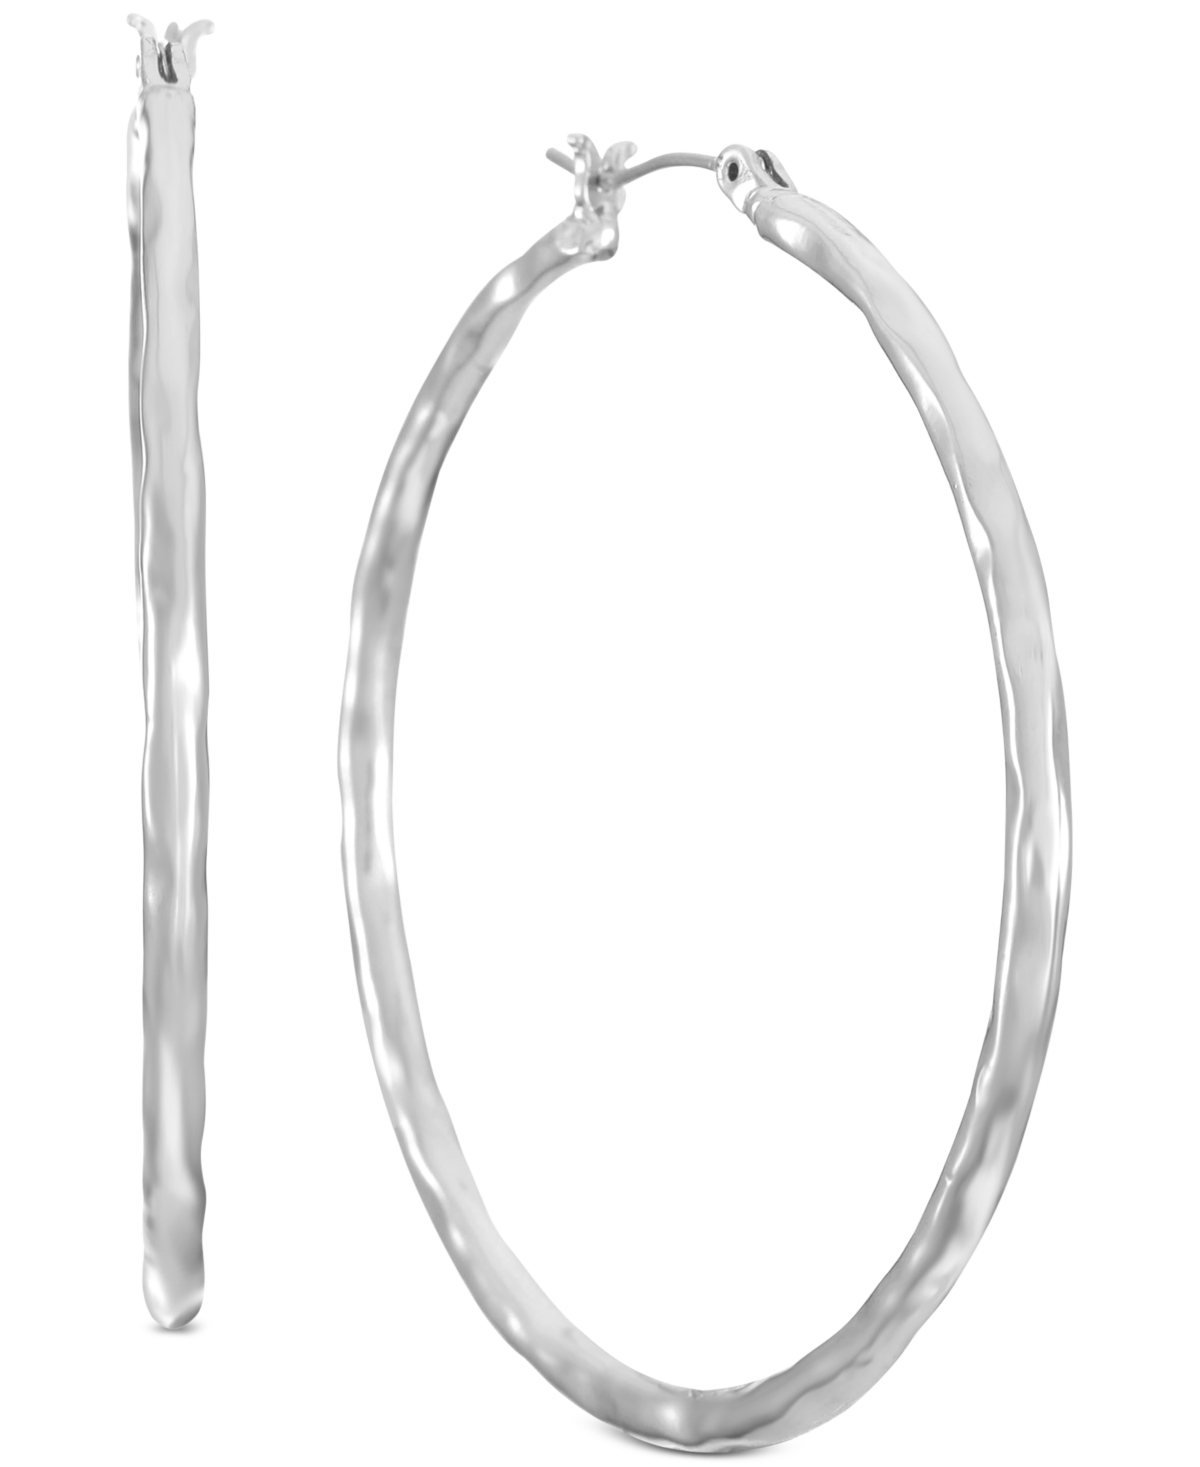 Silver-Tone Medium Hammered Hoop Earrings, 1.38", Created for Macy's - Silver